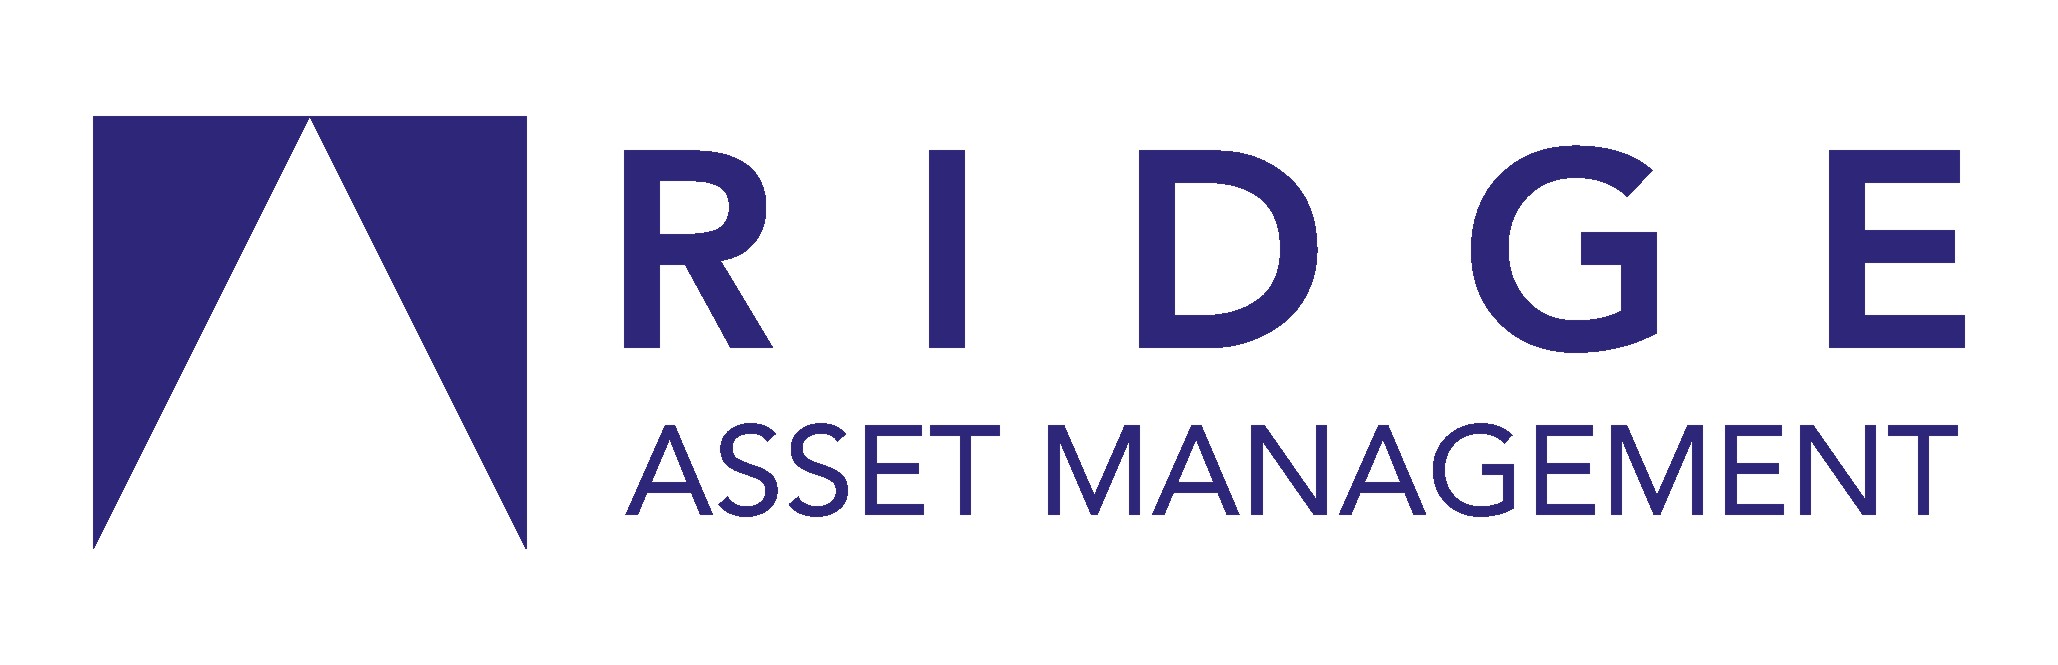 Ridge Asset Management's logo